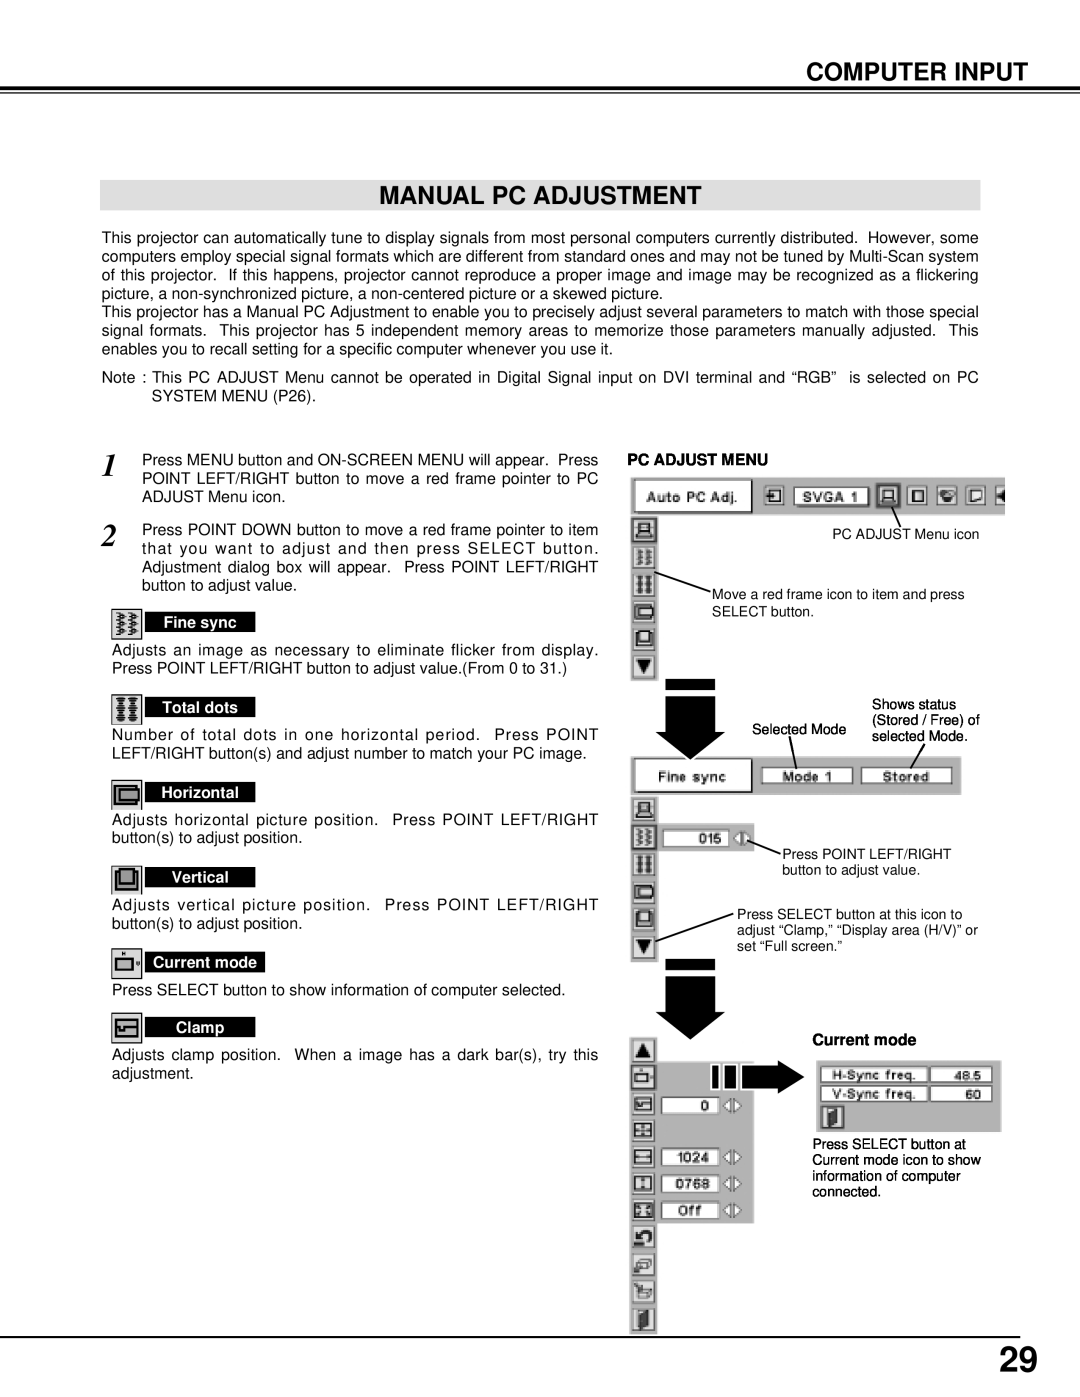 Christie Digital Systems 38-VIV301-01 Computer Input Manual Pc Adjustment, Fine sync, Total dots, Horizontal, Vertical 